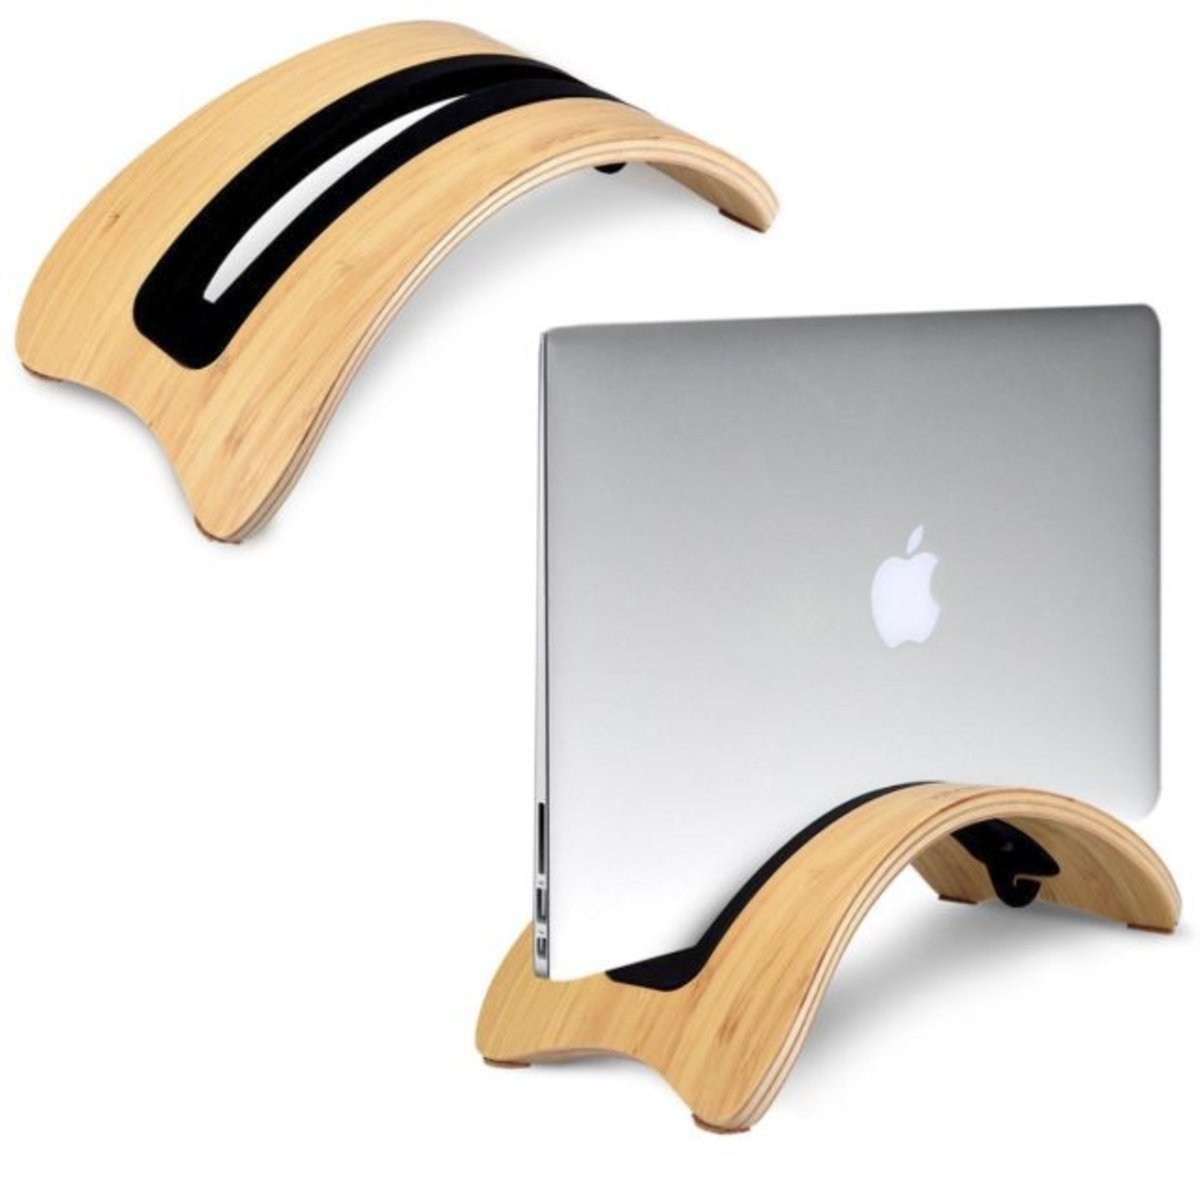 5 accesorios imprescindibles que debes utilizar con tu Mac